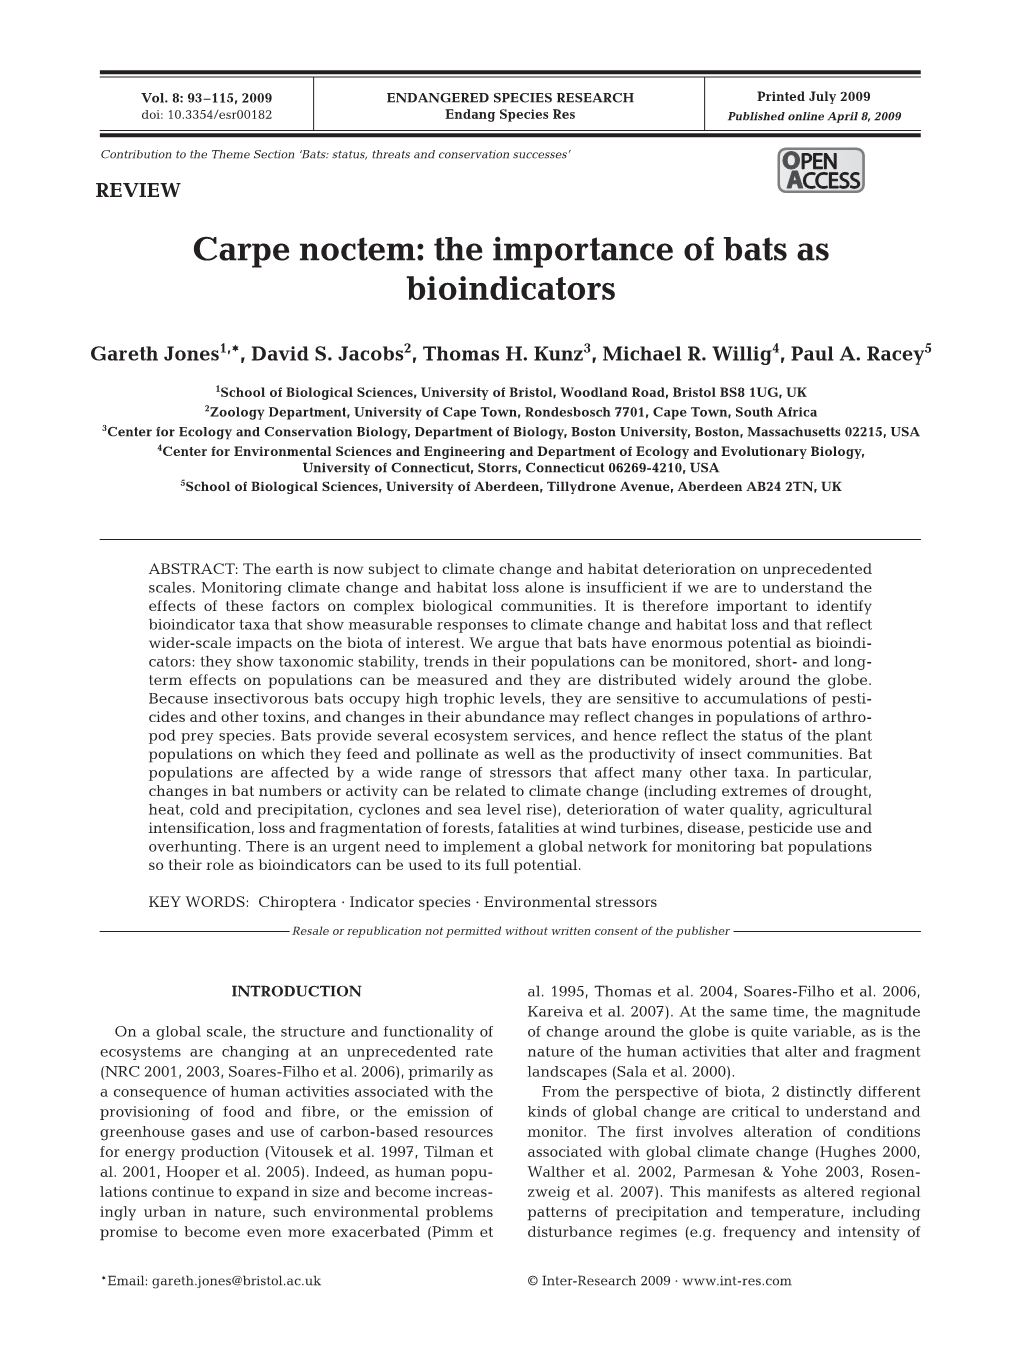 Carpe Noctem: the Importance of Bats As Bioindicators